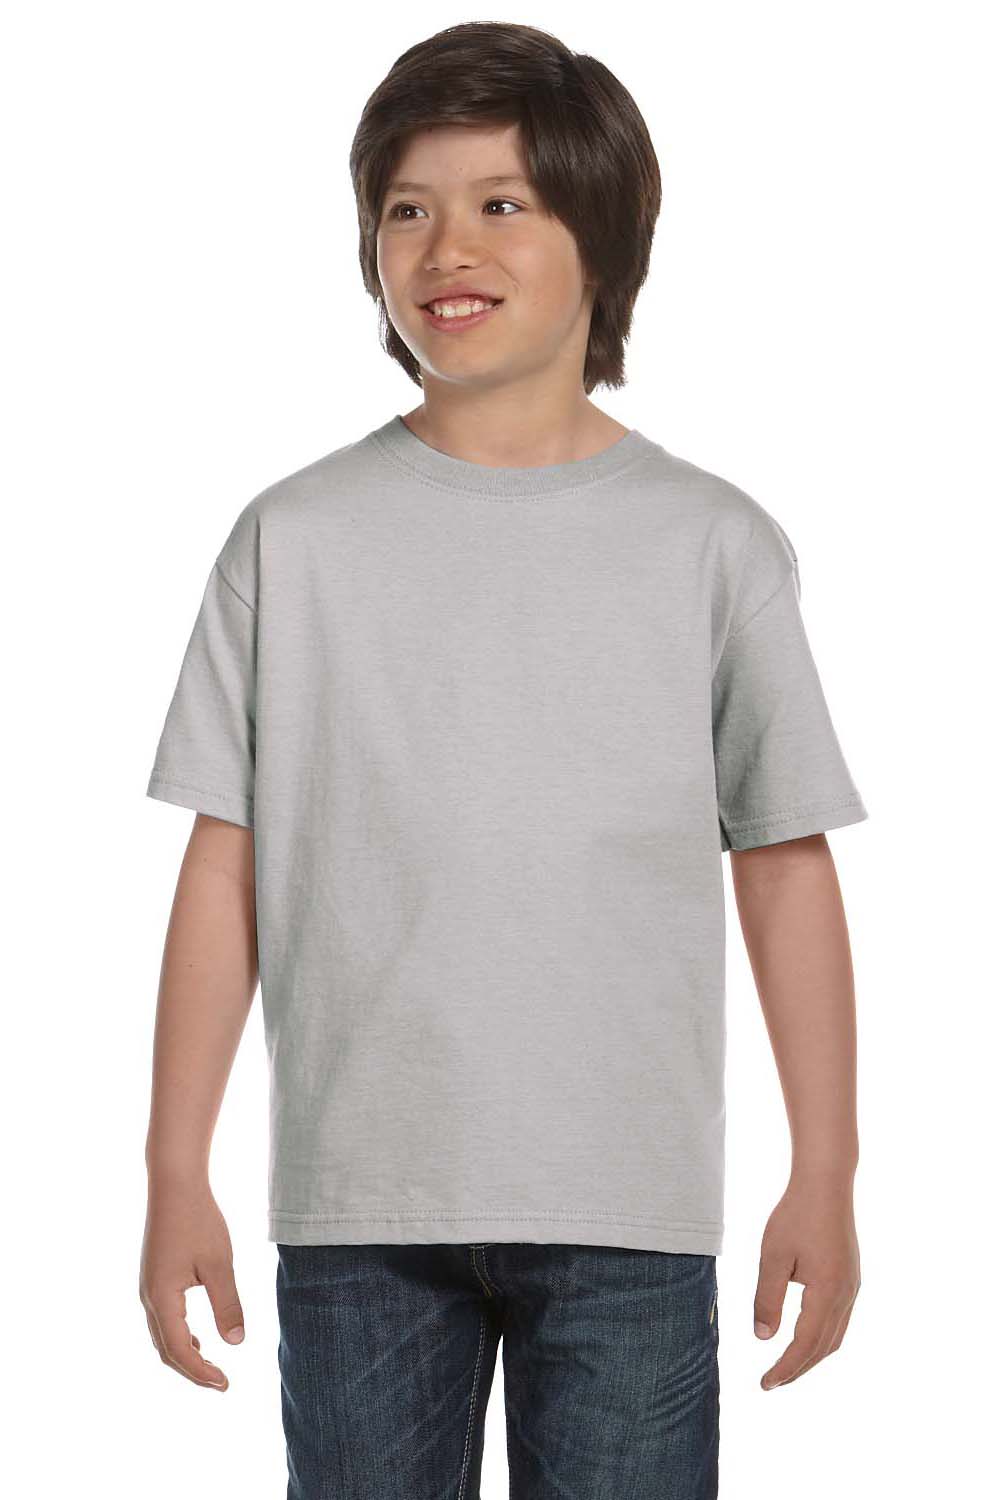 Hanes 5480 Youth ComfortSoft Short Sleeve Crewneck T-Shirt Light Steel Grey Front